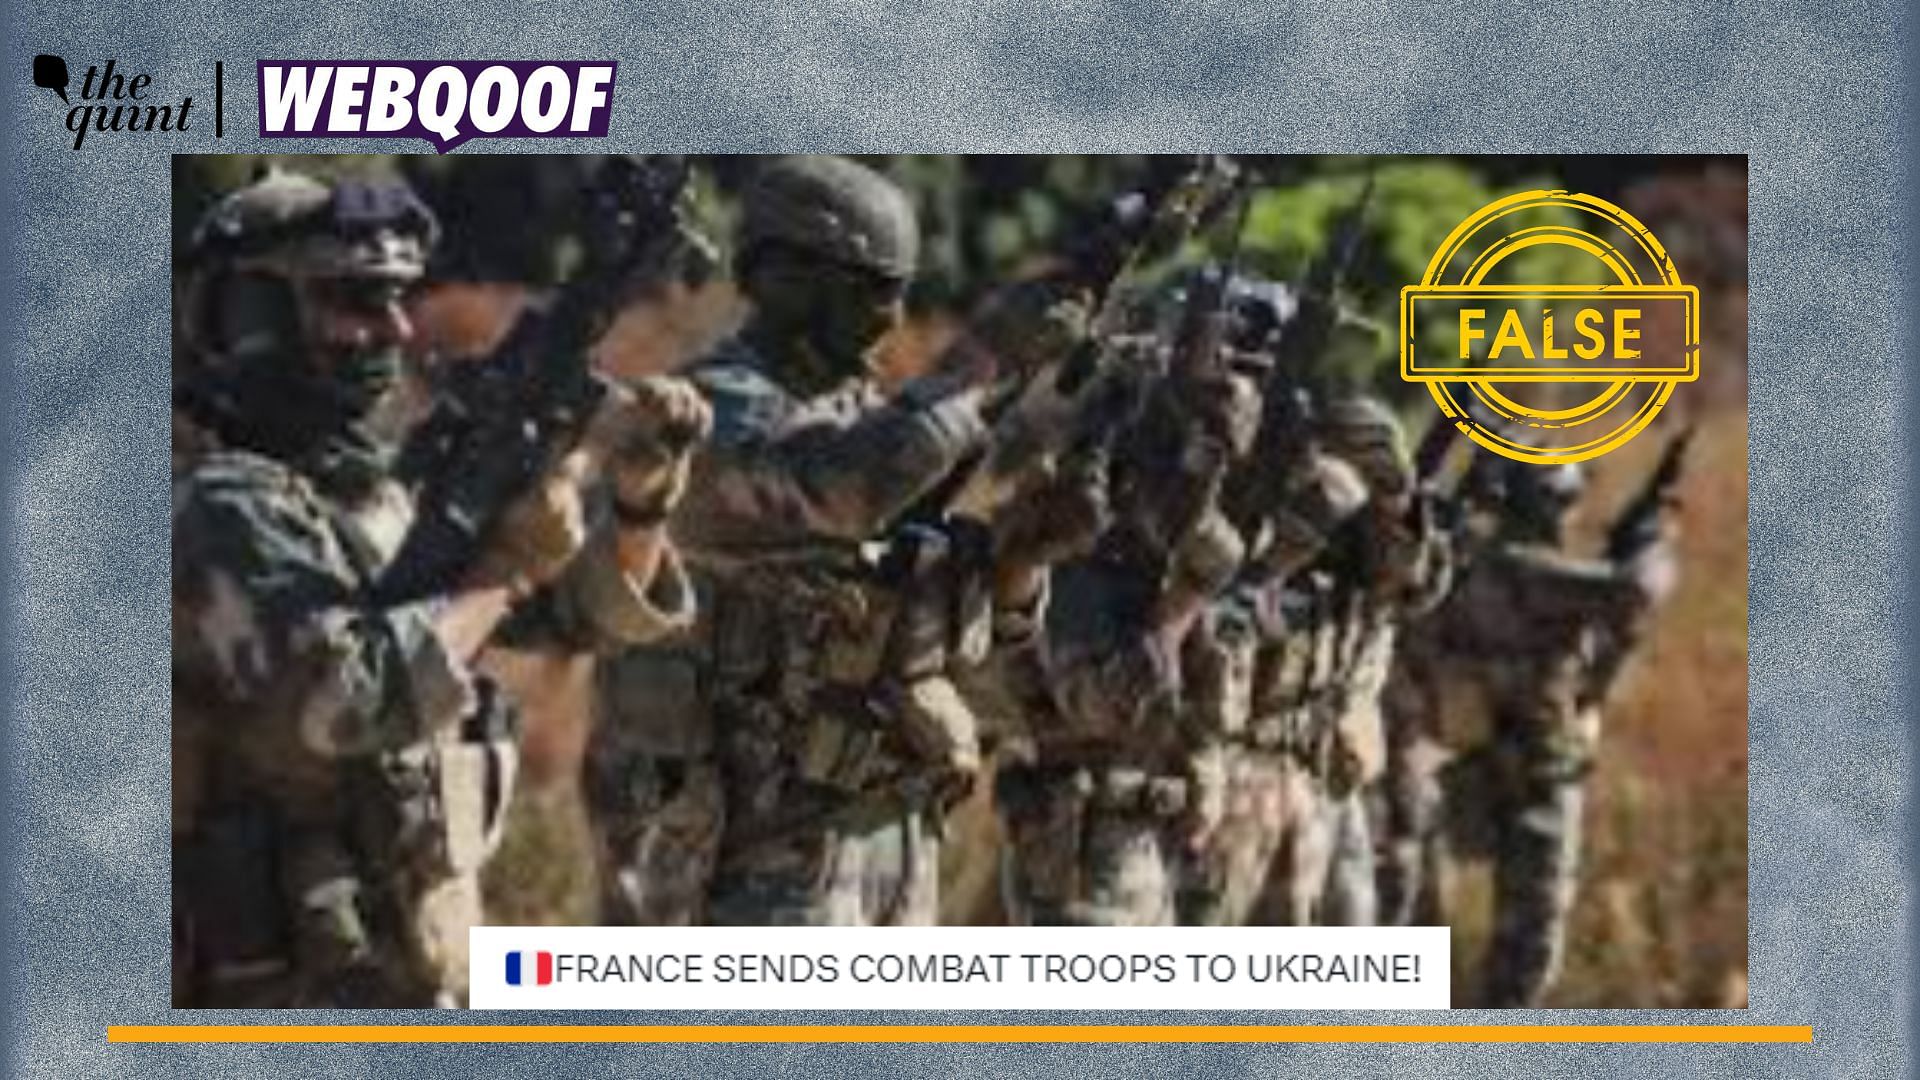 <div class="paragraphs"><p>Fact-Check | The claim about France sending troops to Ukraine is false.</p></div>